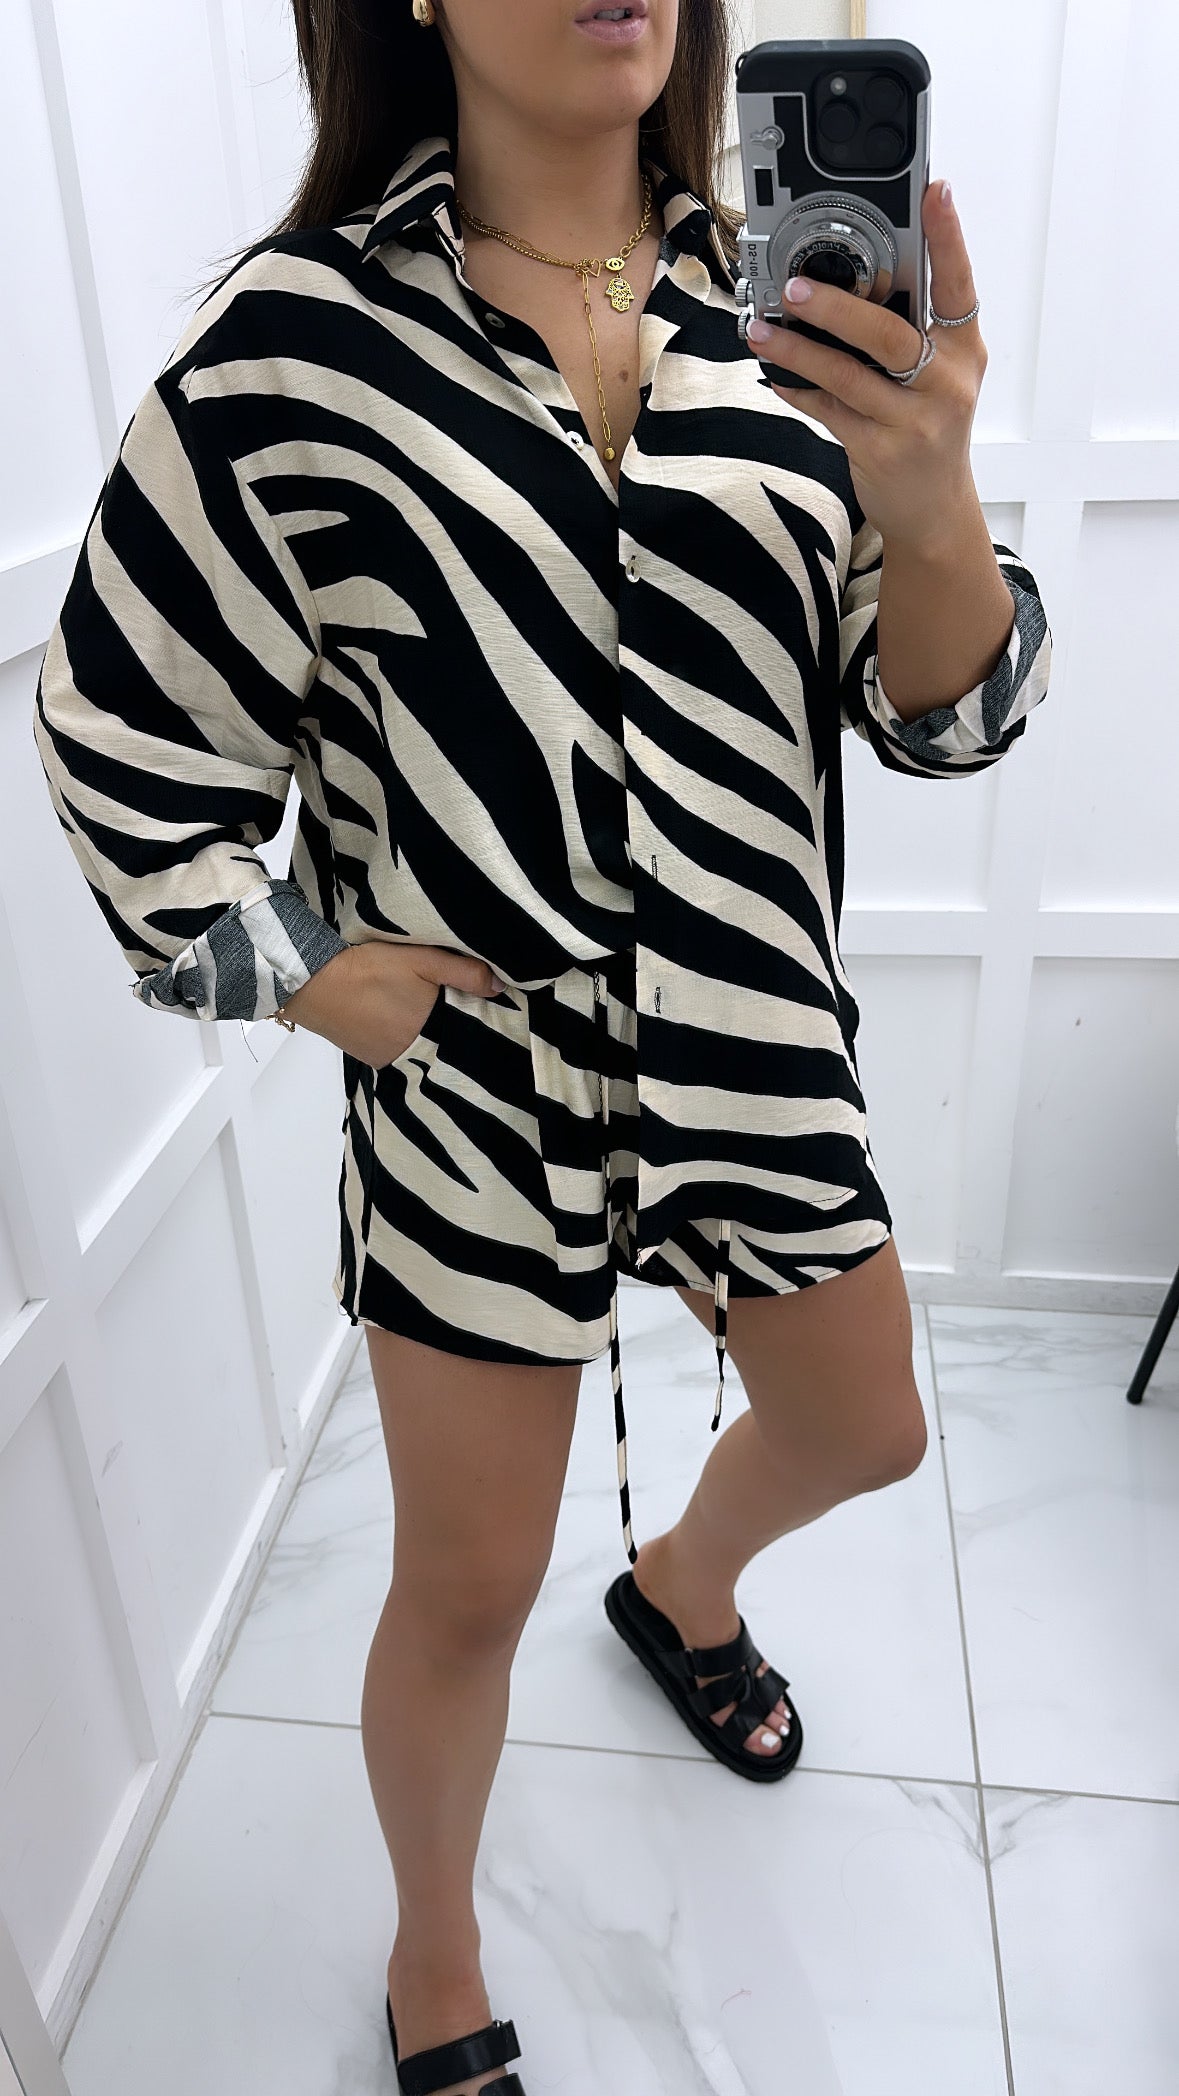 ARABELLA black zebra shirt and shorts co-ord